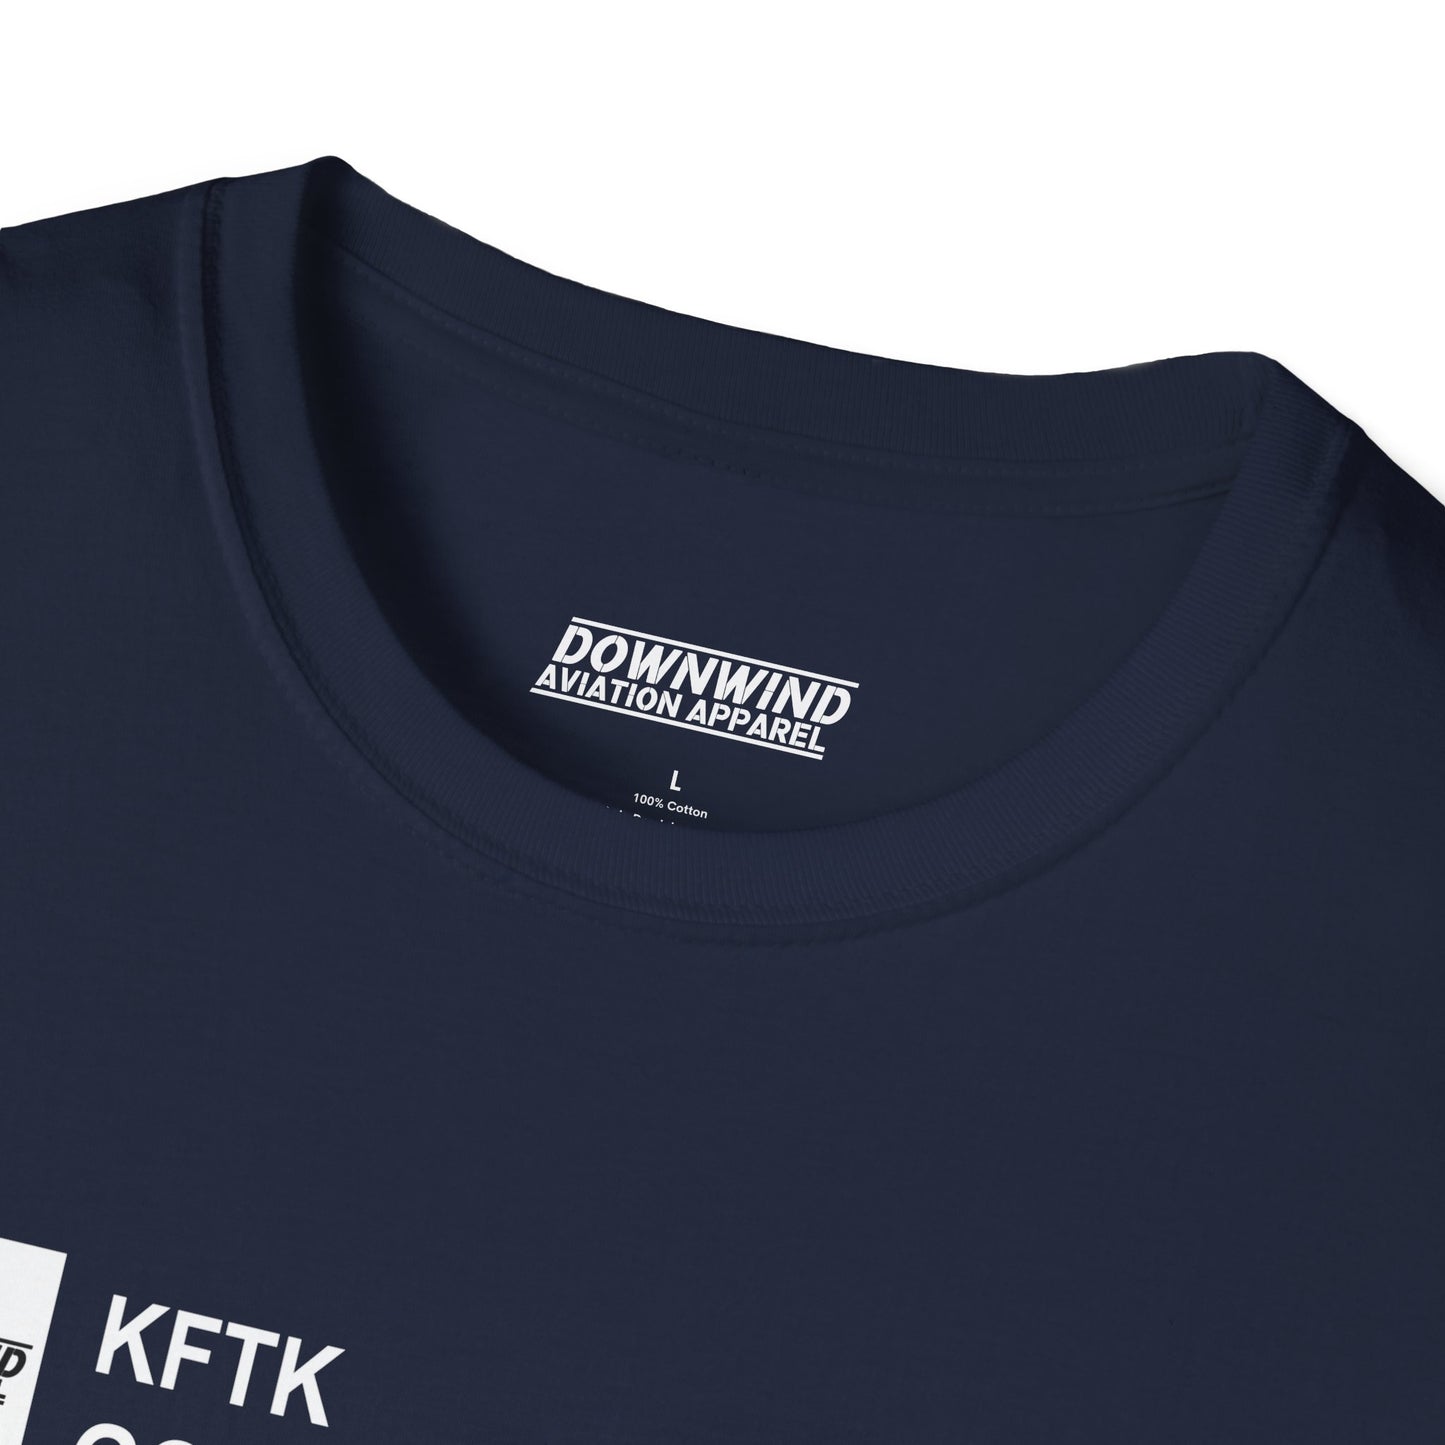 KFTK / Godman Army Airfield T-Shirt